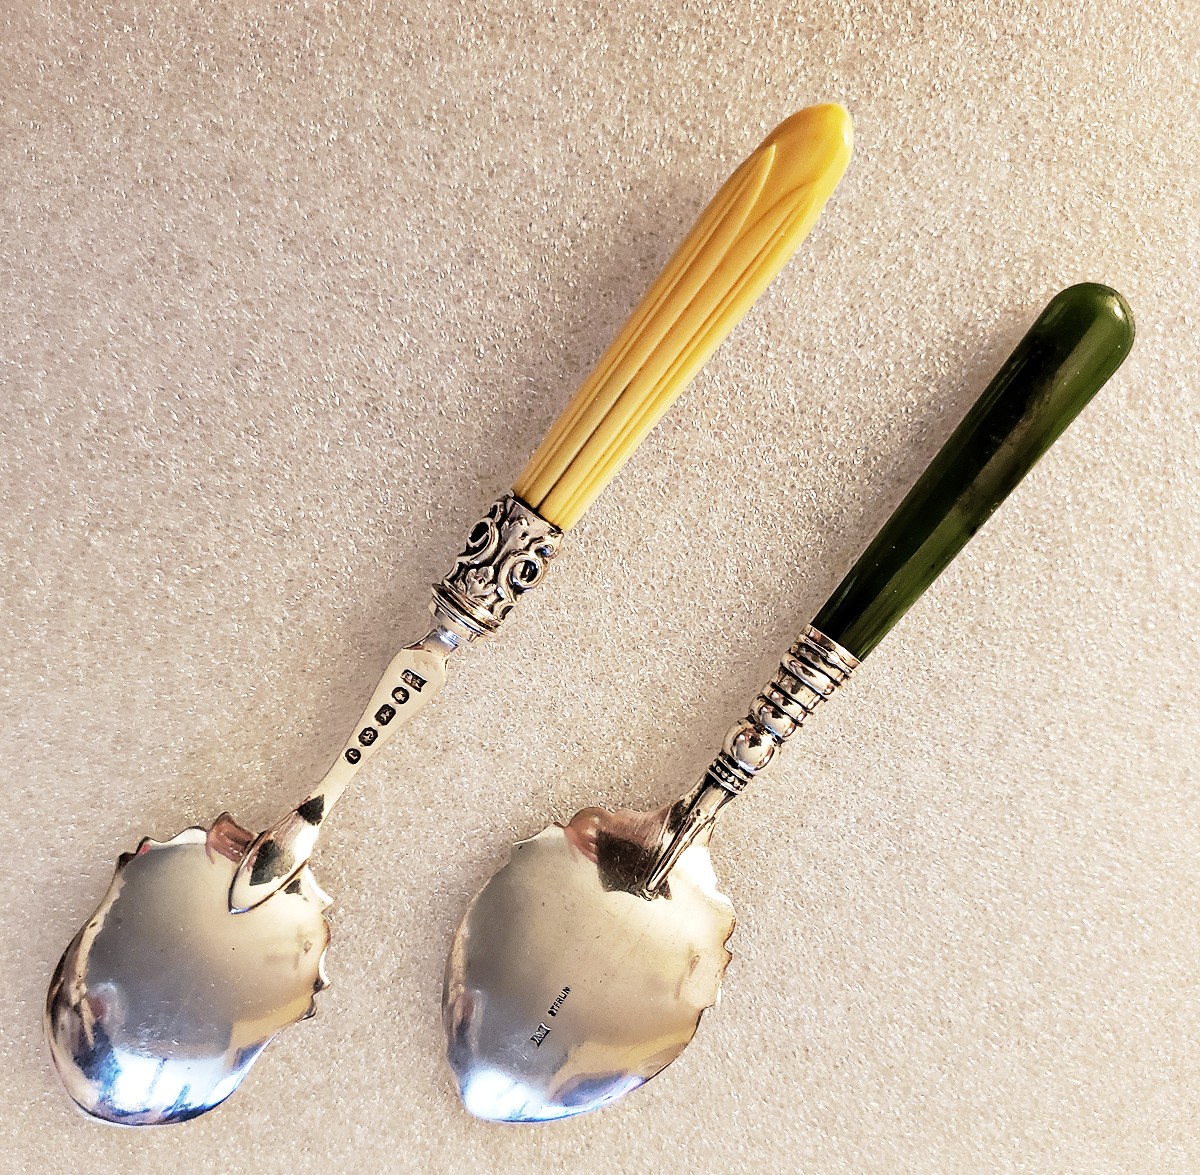 new-zealand-greenstone-silver-AM-british-ivory-GU-jam-spoons-2 (1).jpg